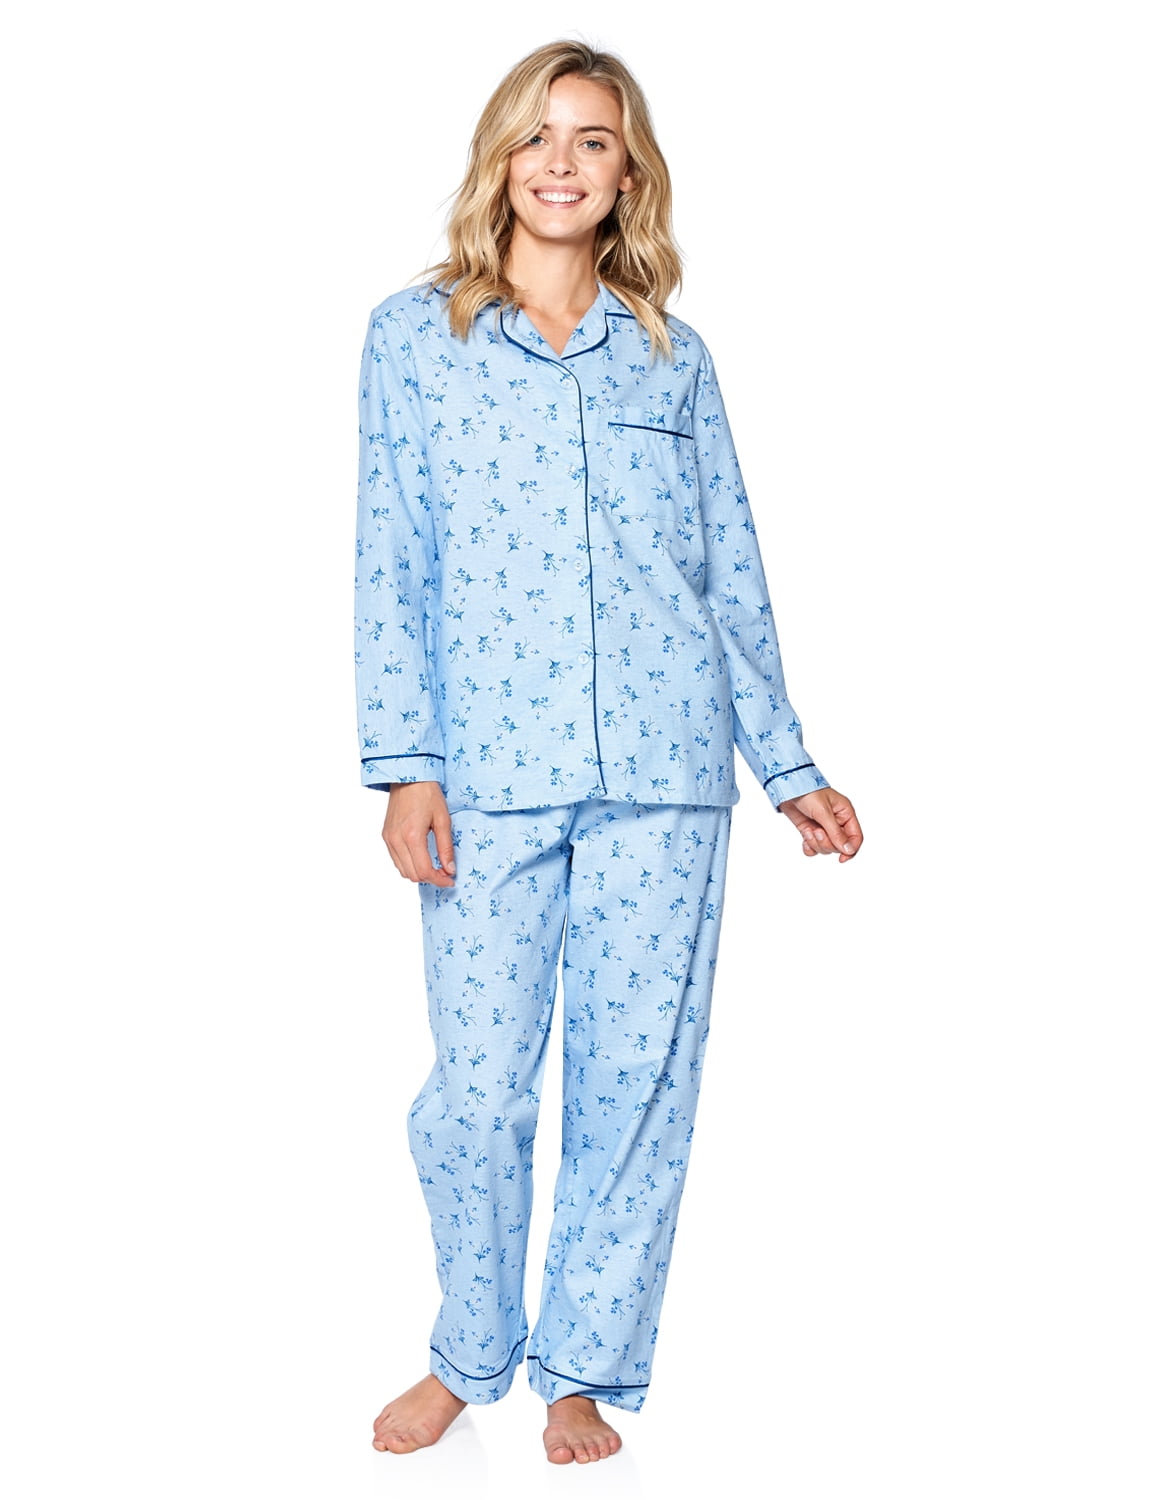 NEW SOFT size M 8-10 Munki Munki sleepwear pajama set Womens Travel White 